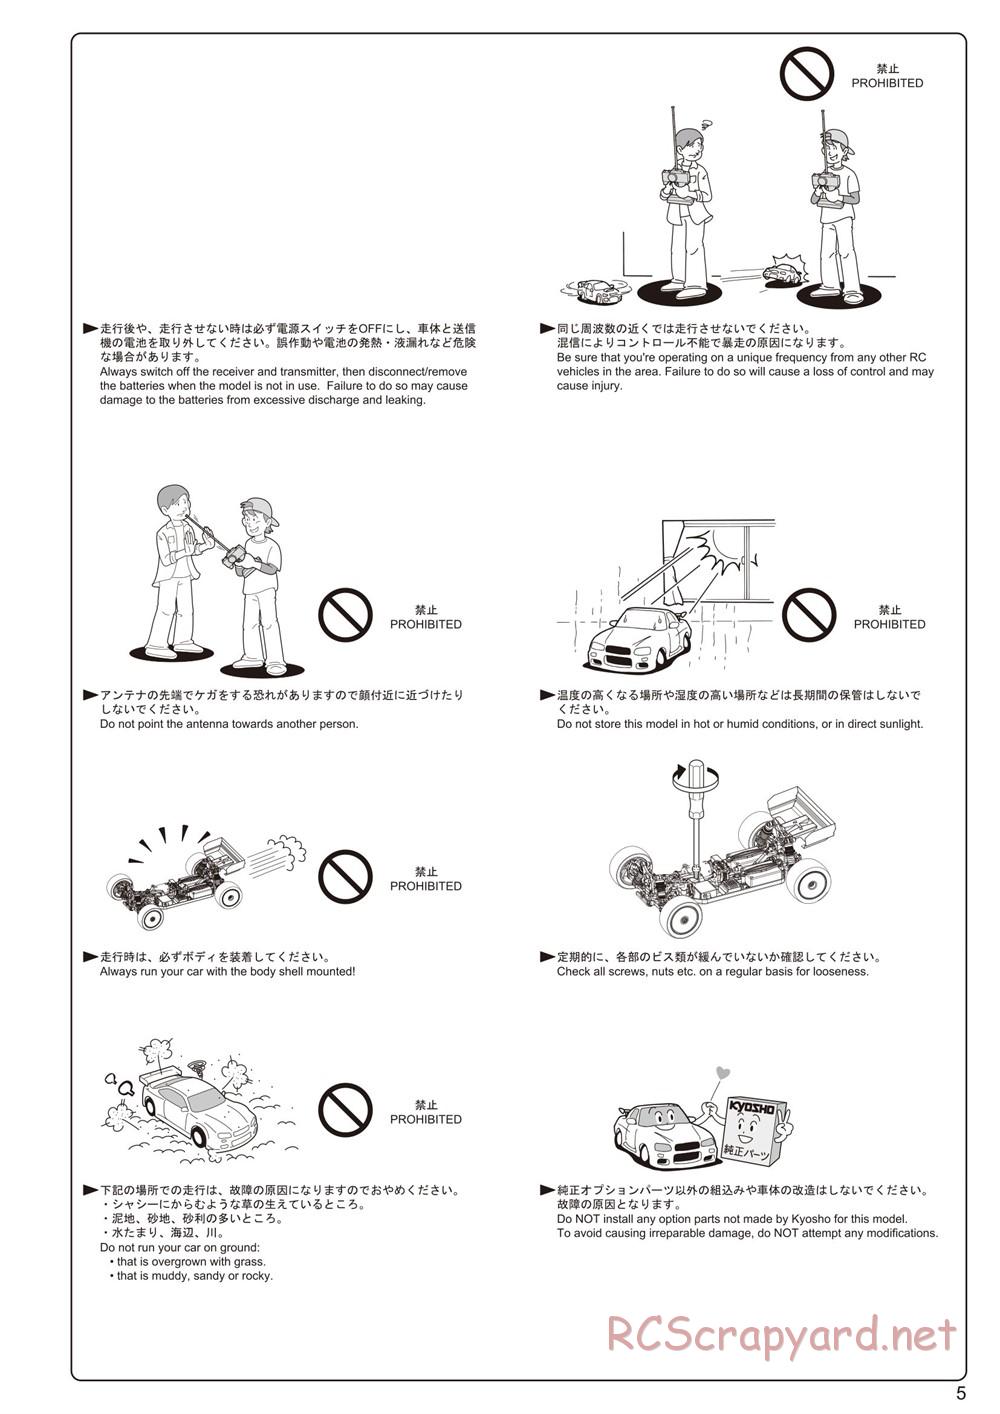 Kyosho - Lazer ZX-6 - Manual - Page 5